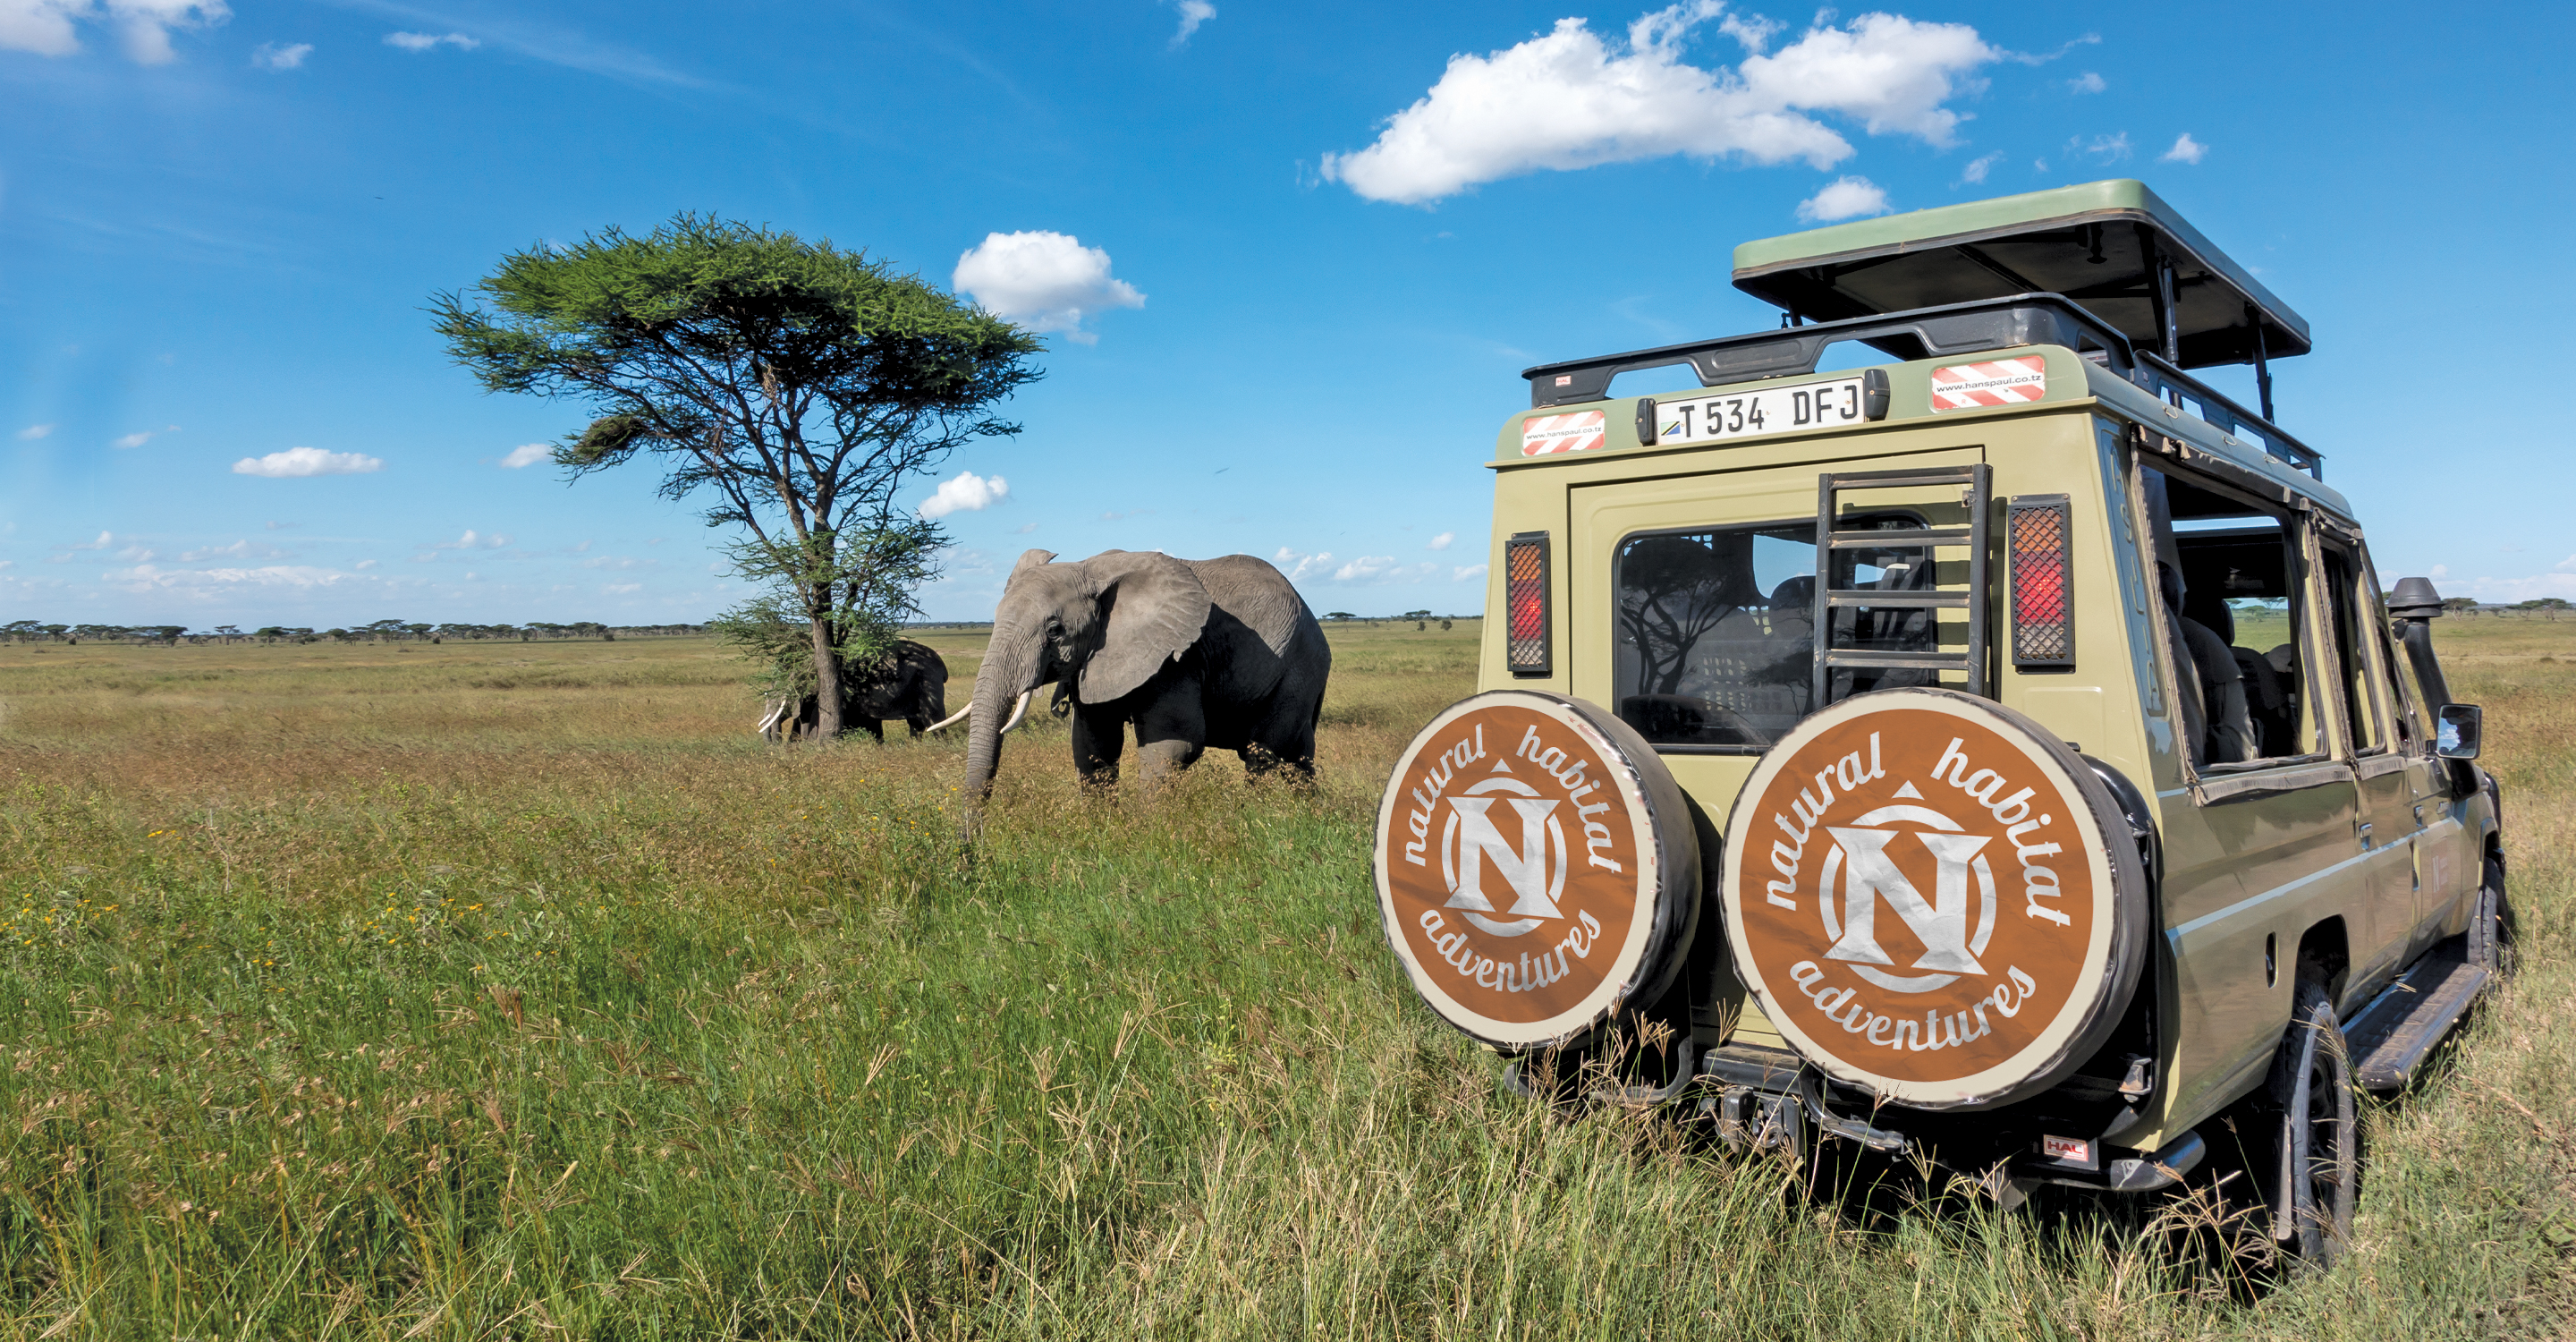 A Natural Habitat Adventures safari truck parks near two African elephants in Serengeti National Park, Tanzania